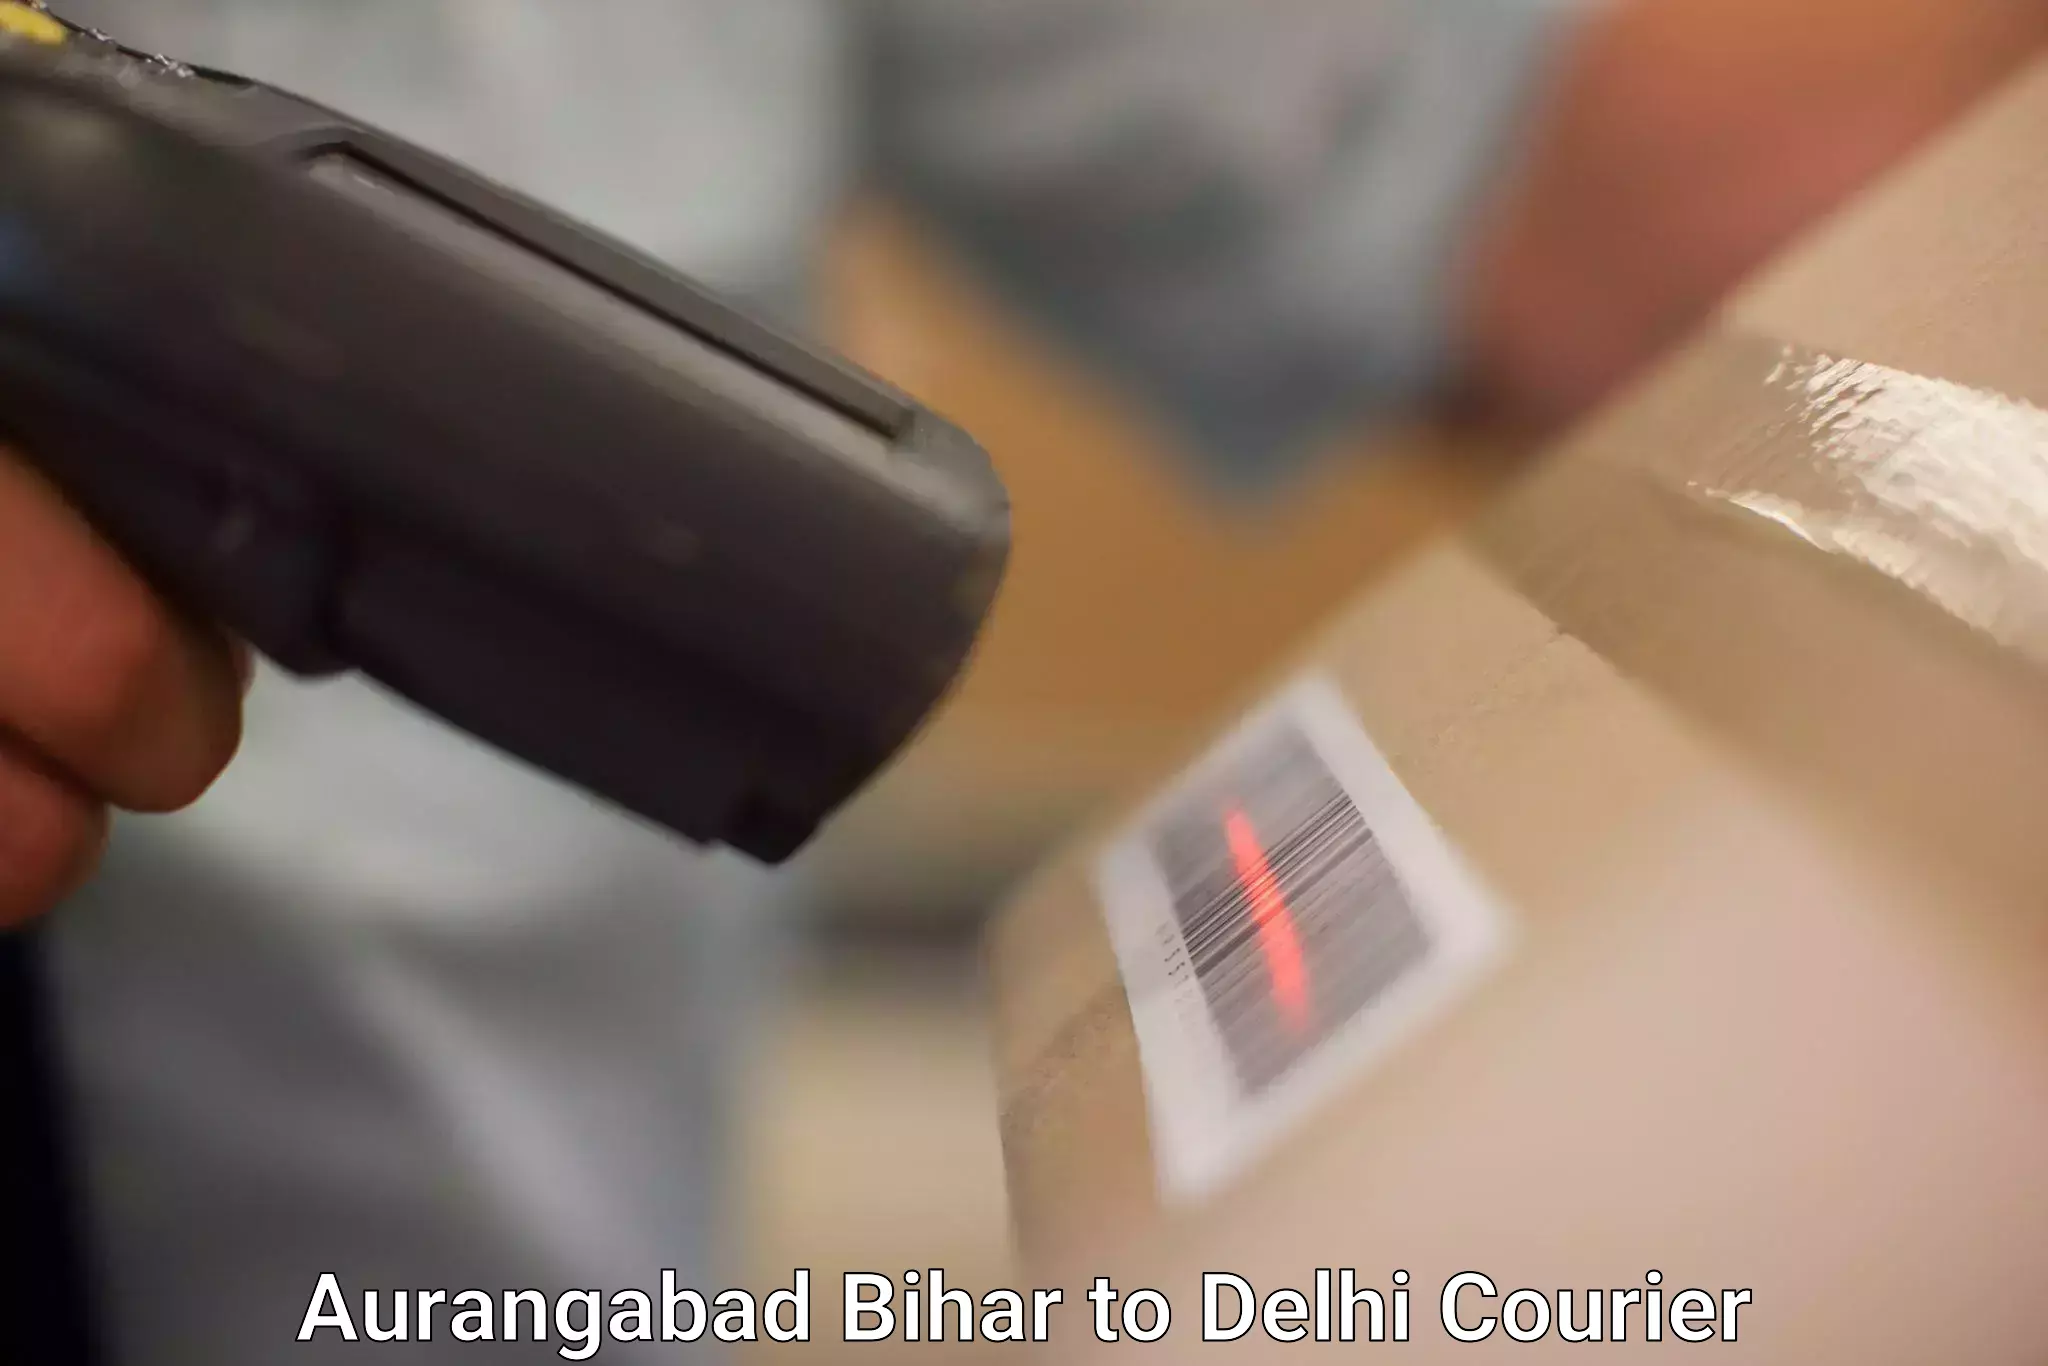 Professional parcel services Aurangabad Bihar to East Delhi